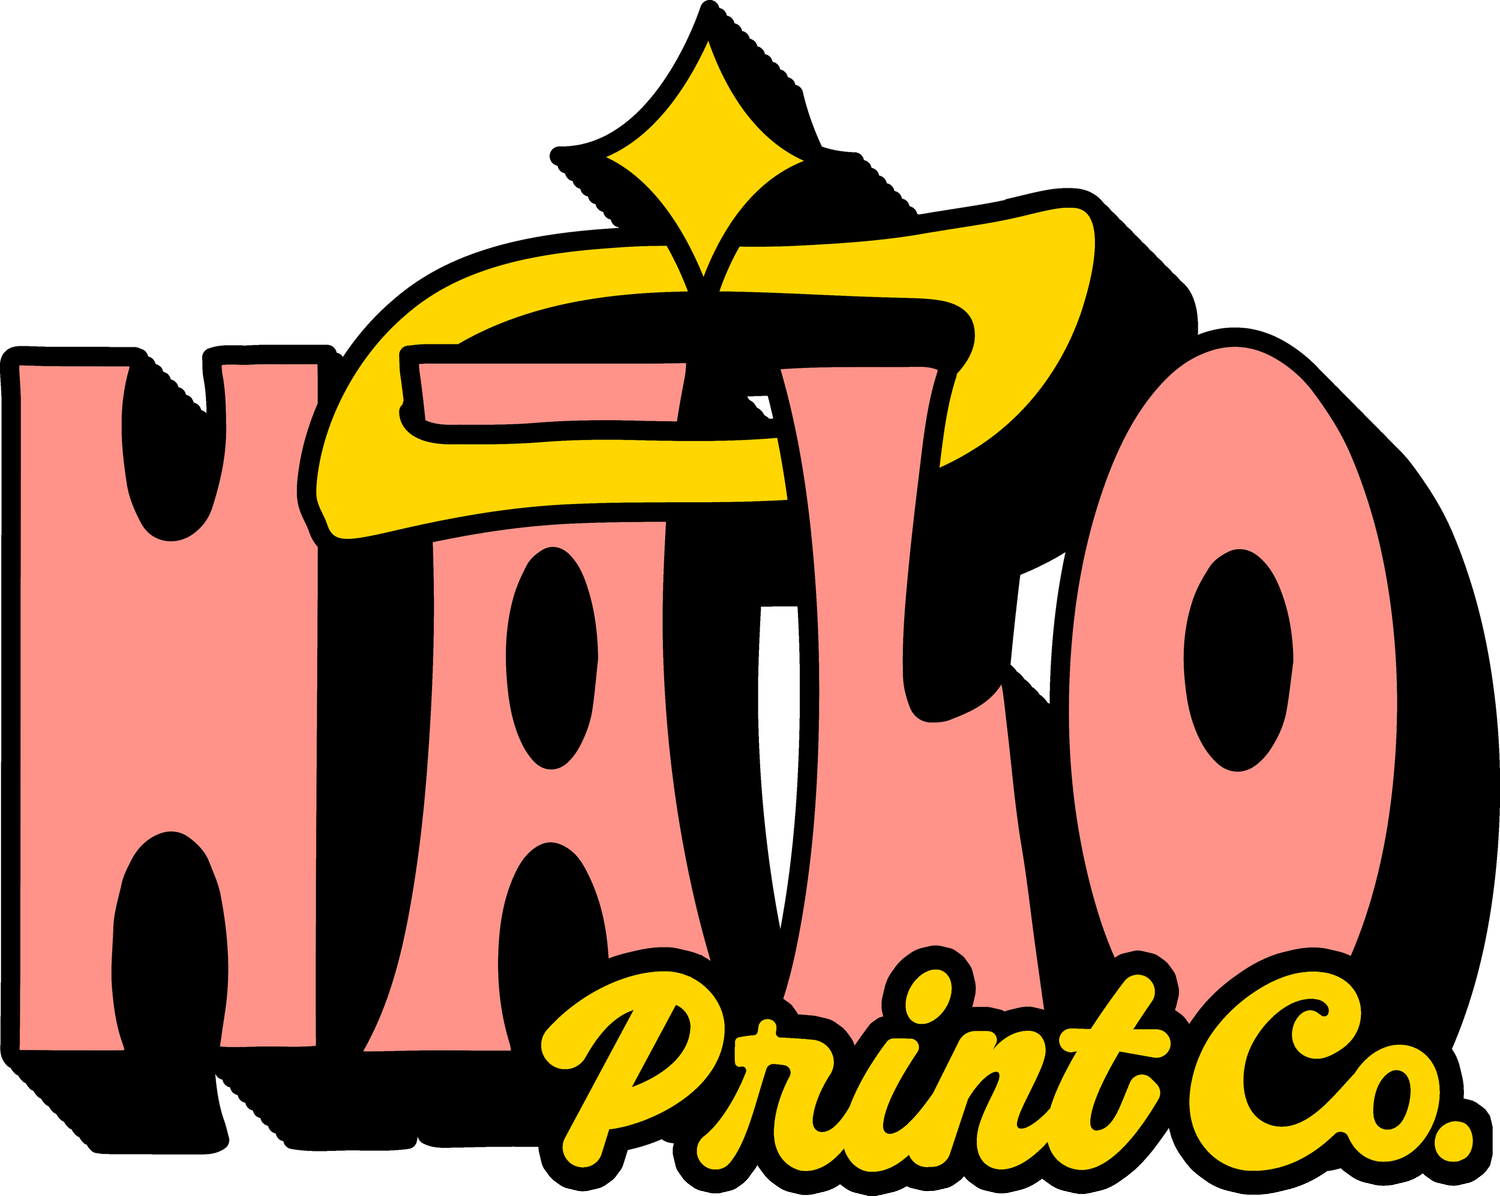 Halo Print Co.